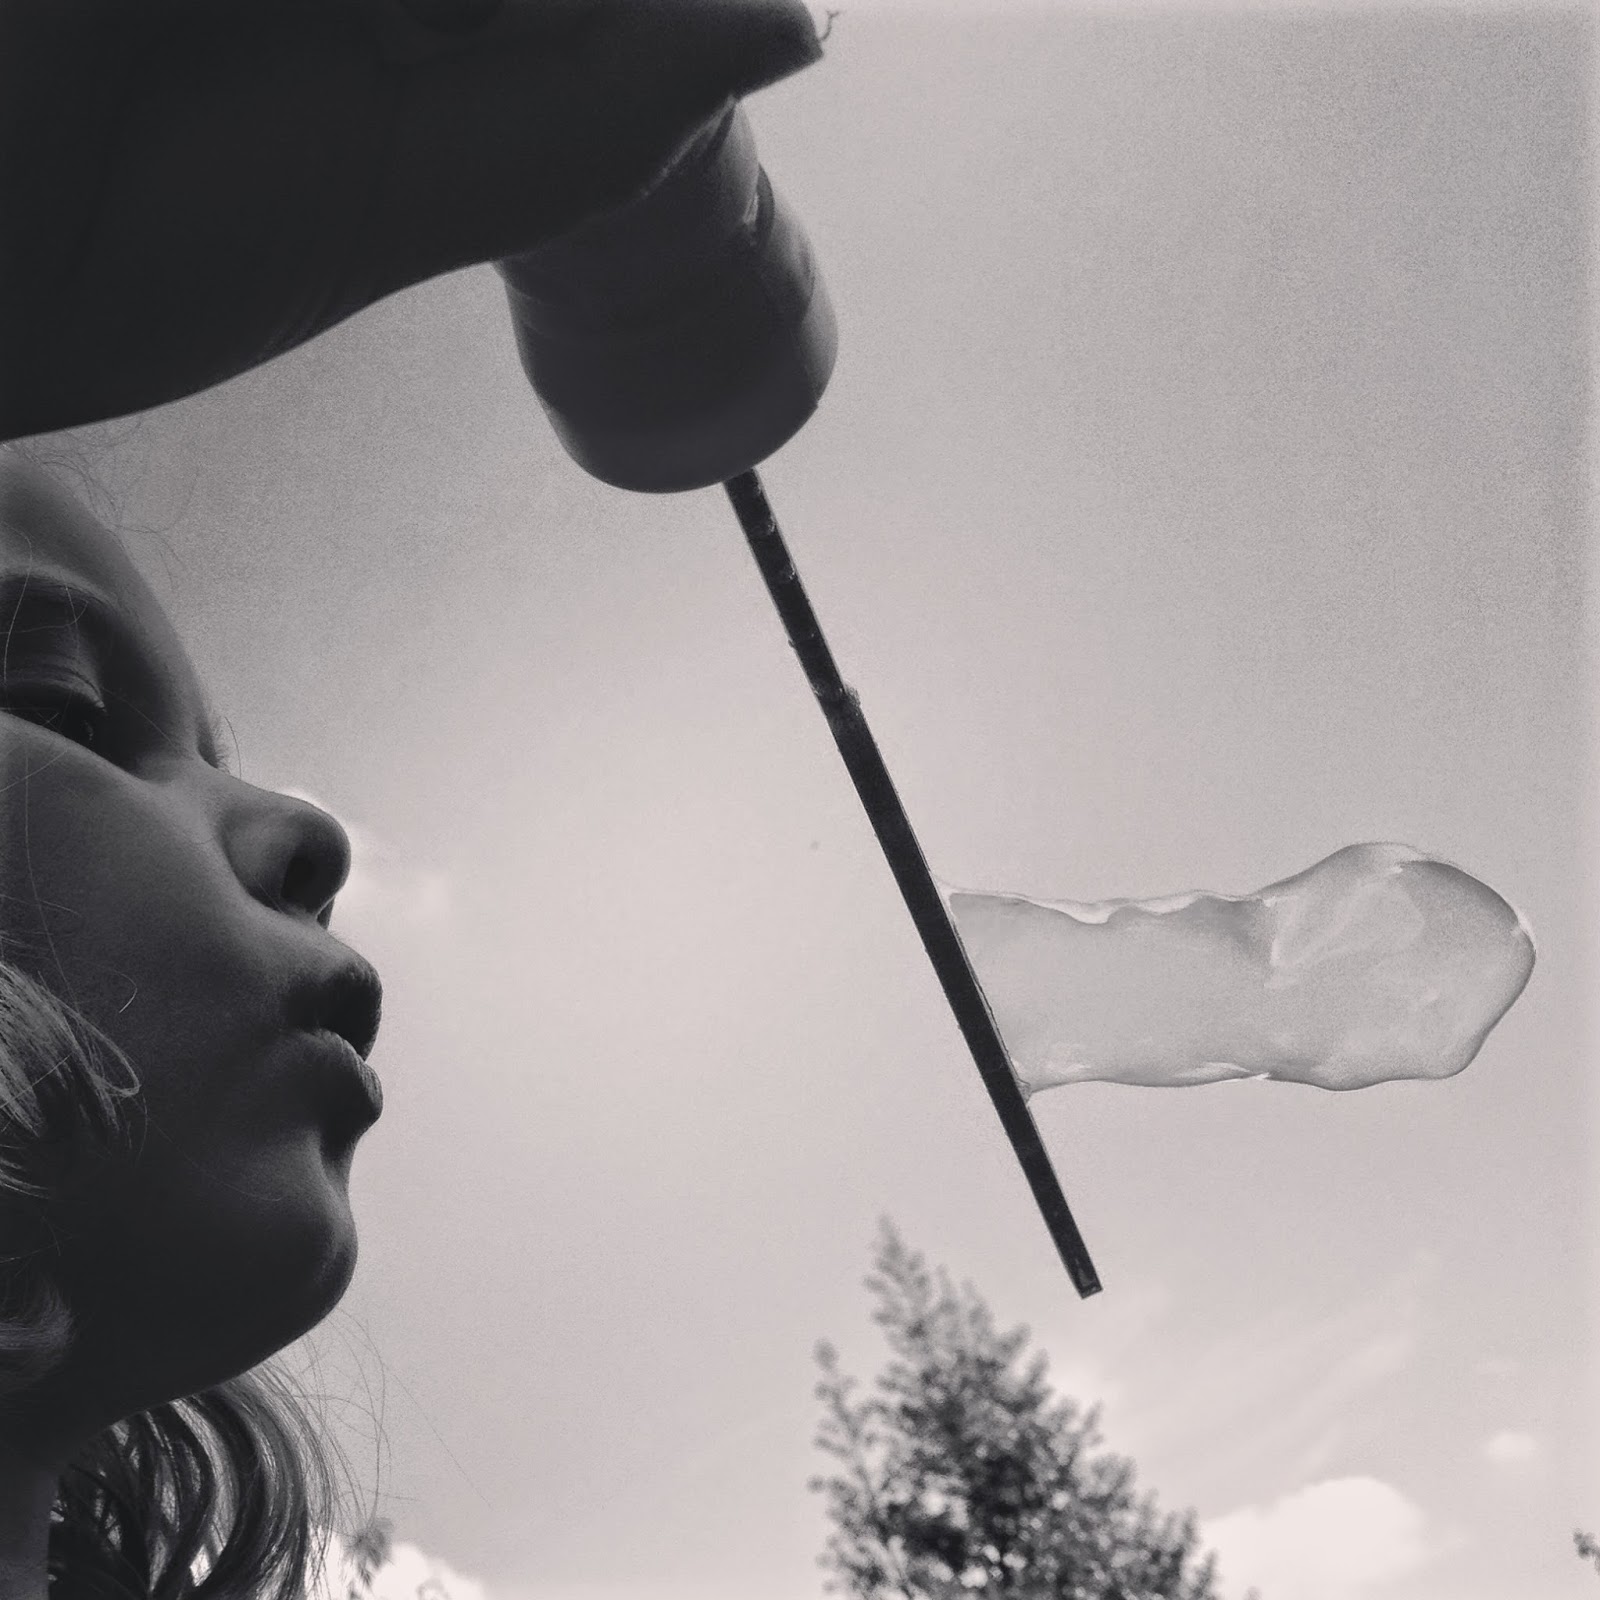 Bubble blowing - Fivegoblogging